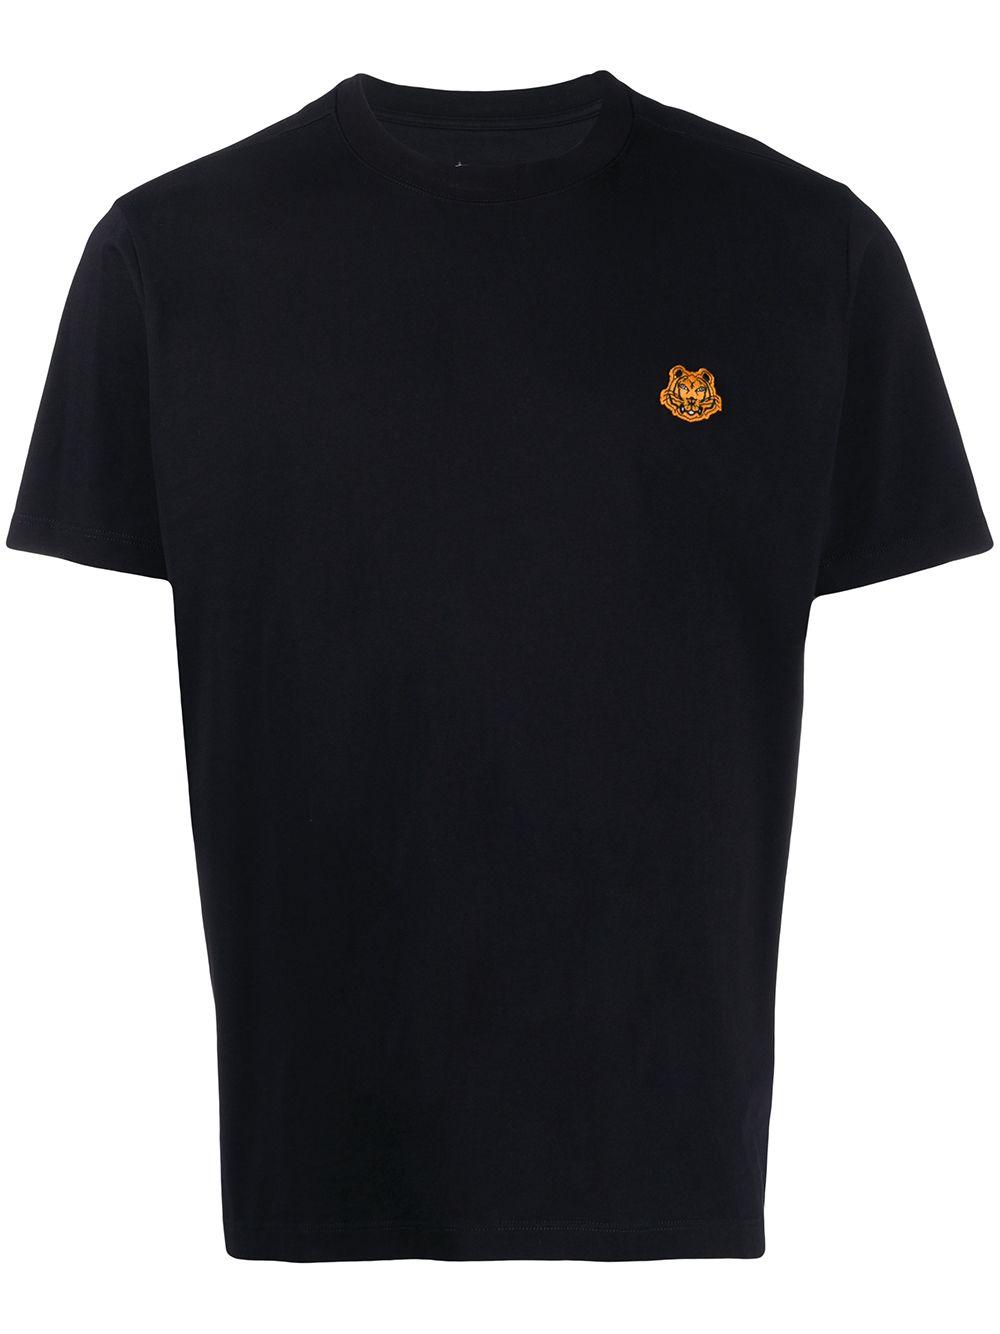 KENZO Tiger T-shirt in Black for Men - Lyst